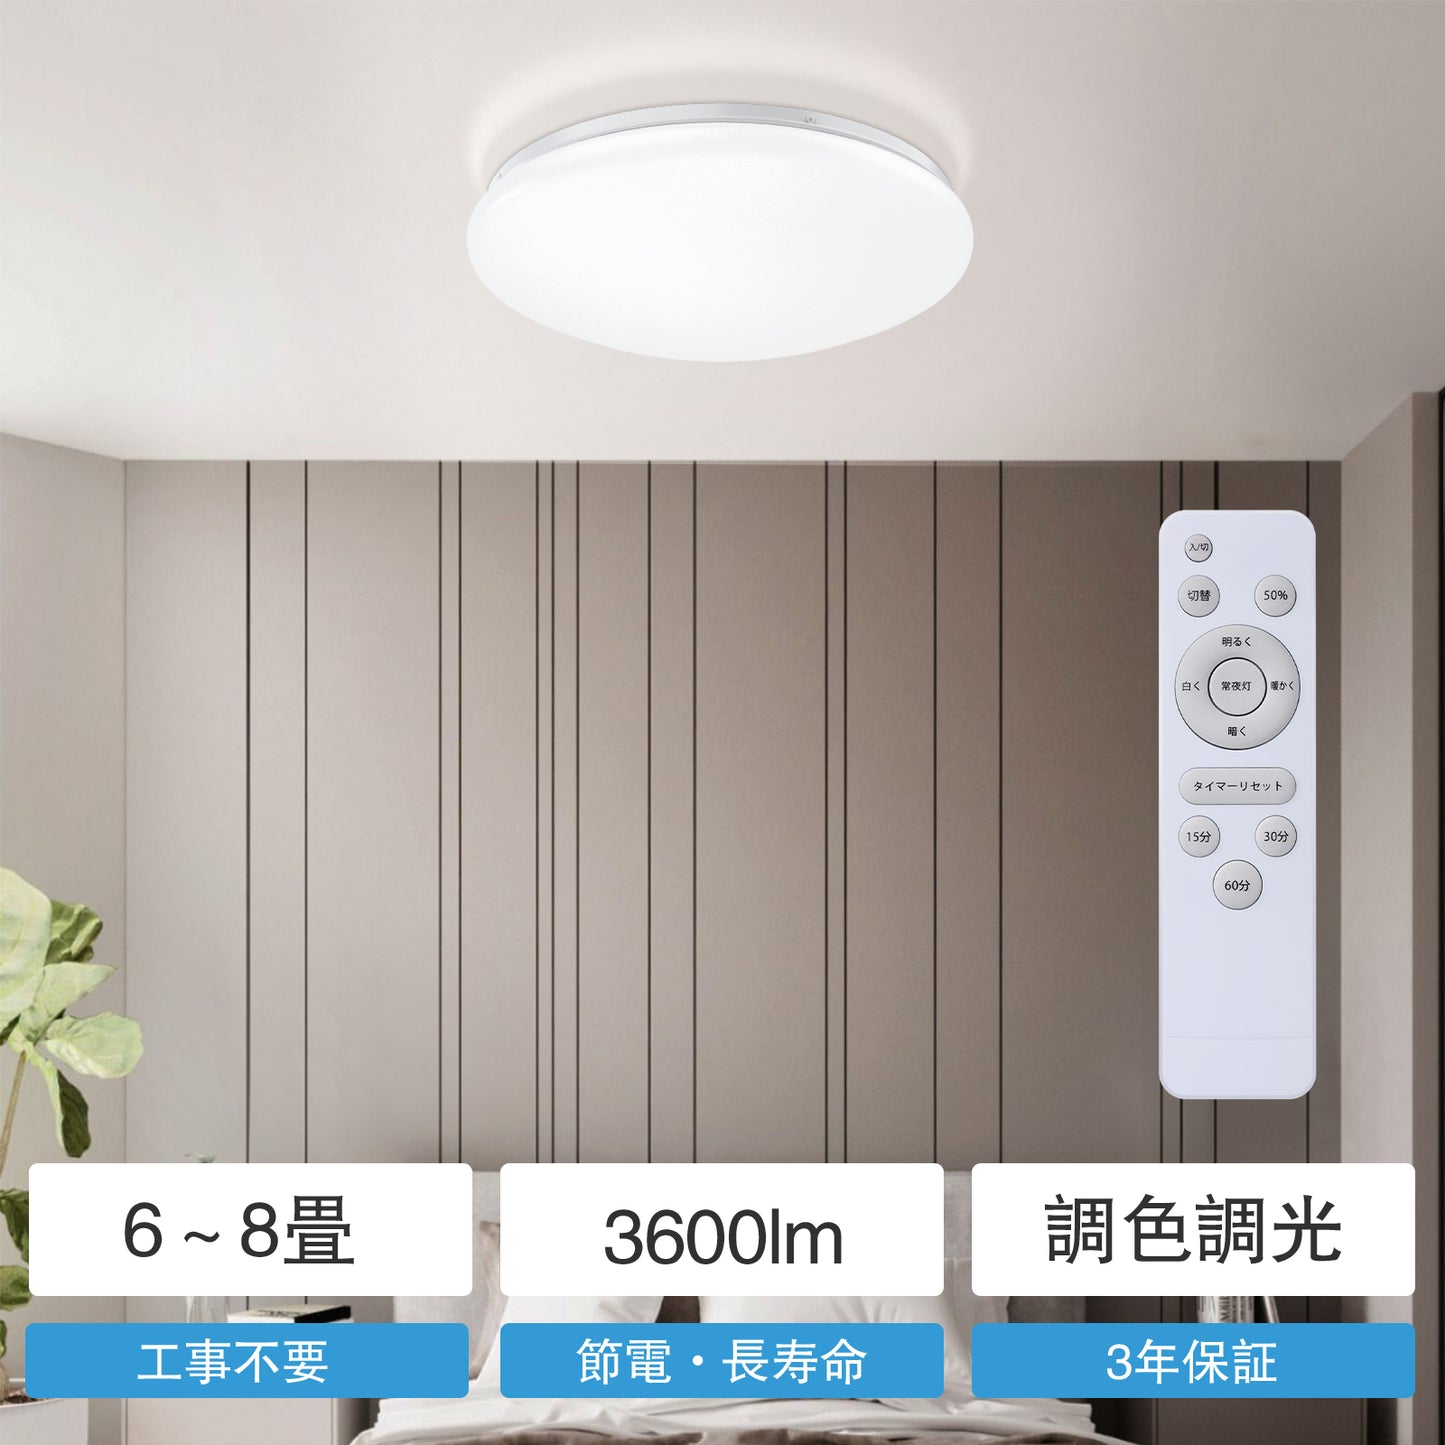 MOONPAI LEDシーリングライト 8畳 3600lm 直径33CM 調光 調色 リモコン付き 常夜灯 メモリー機能 15/30/60分タイマー 照明器具 天井照明 室内照明 寝室 リビング